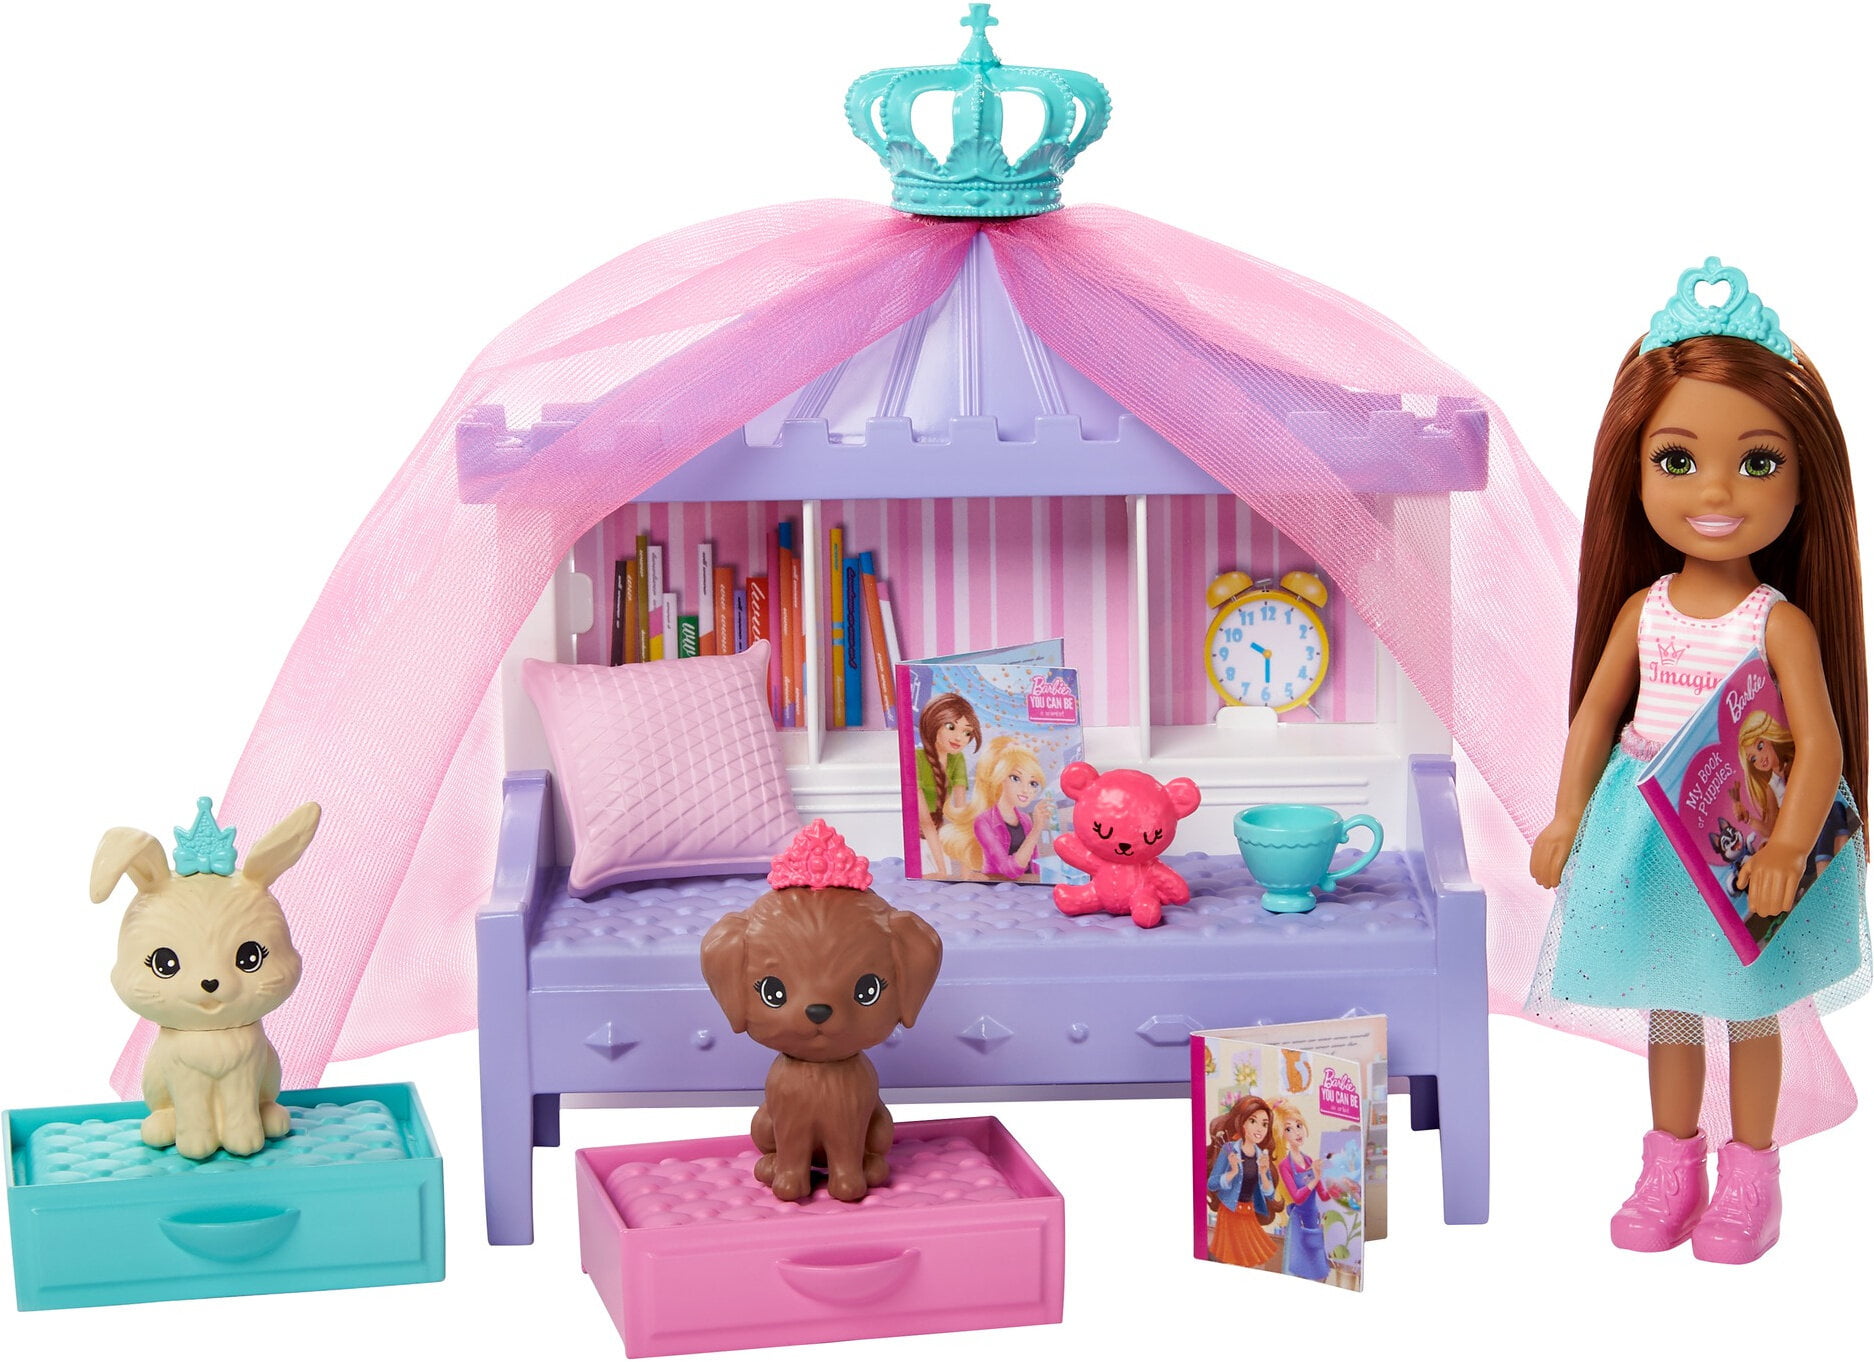 Barbie Princess Adventure Chelsea Pet Castle Playset 2020 Kid Toy Gift for sale online 